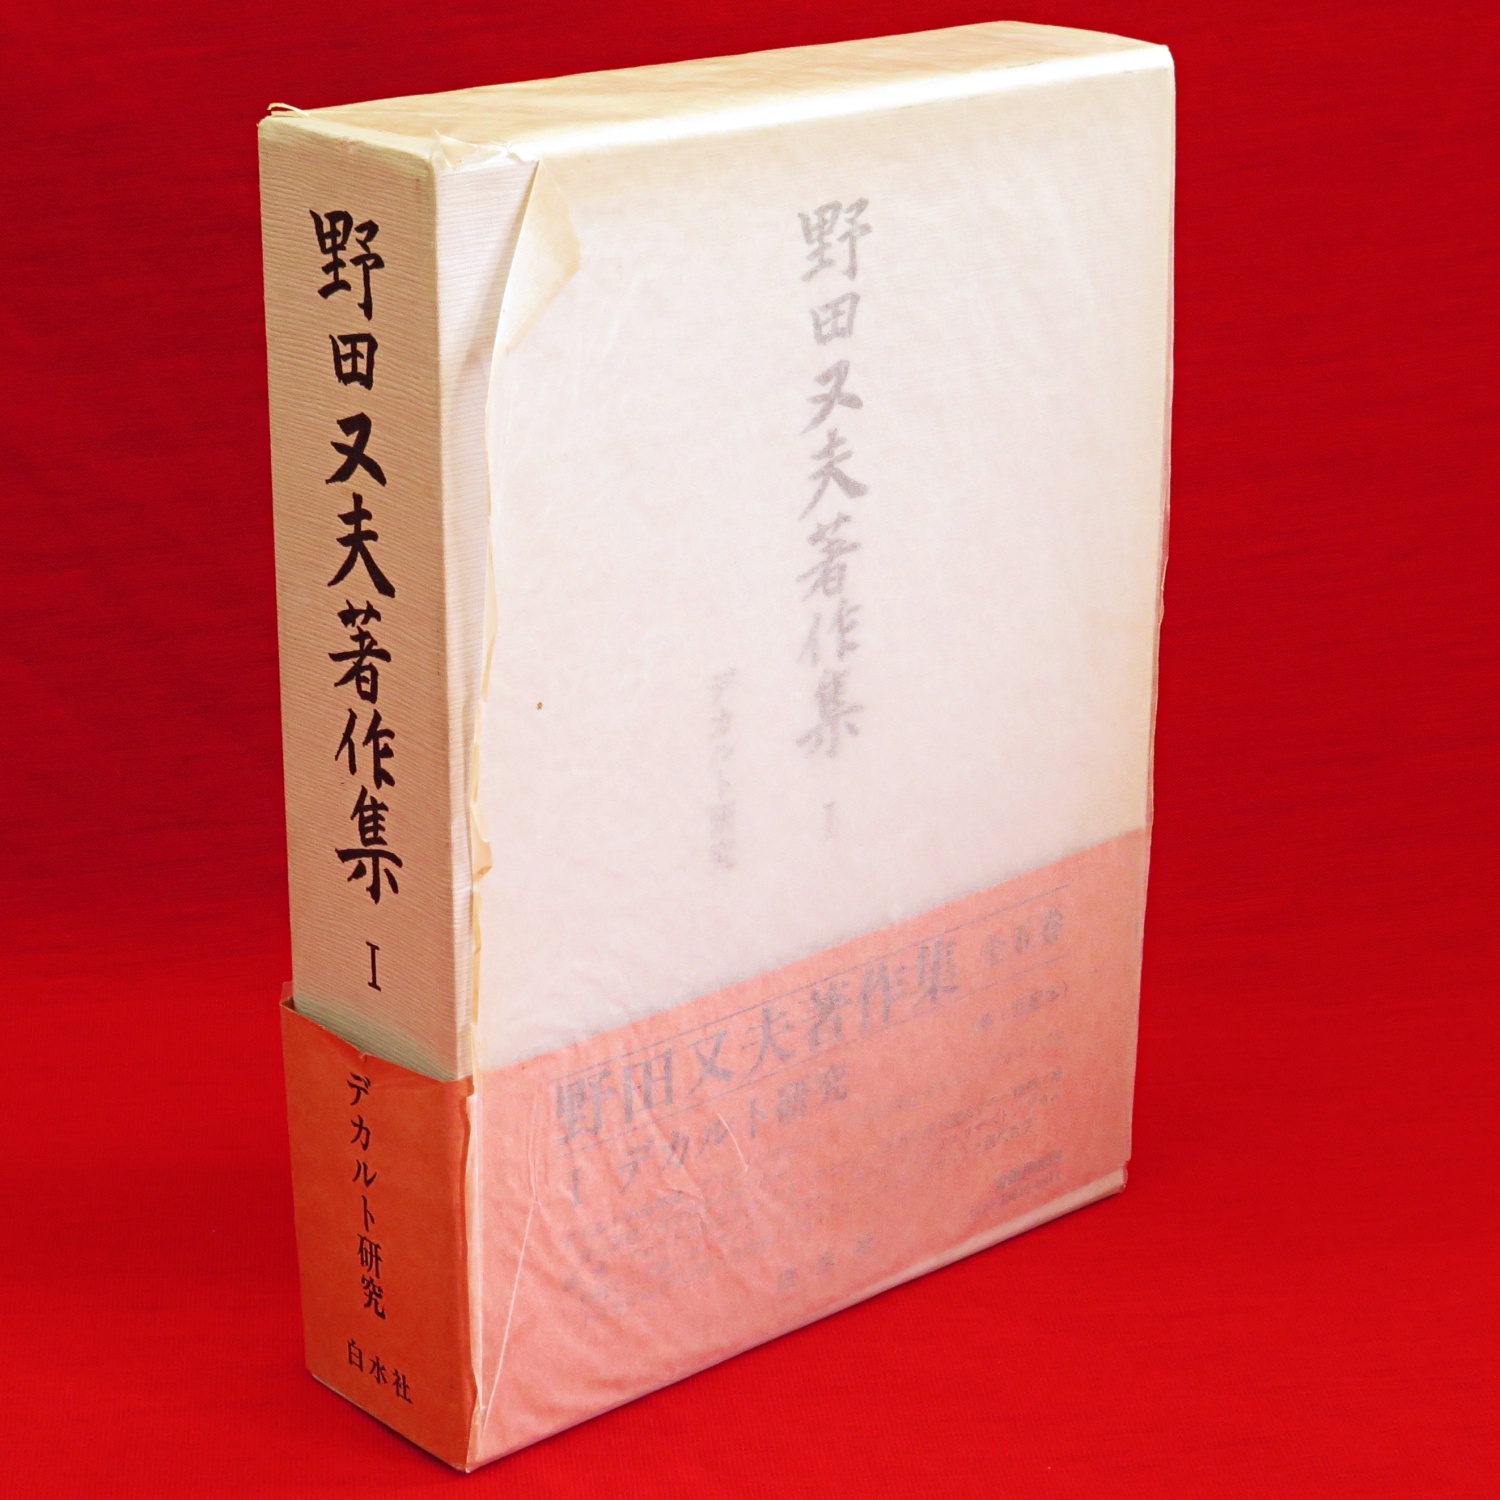 日本古典文学全集 全51冊』など、美術関連ほか計25点新入荷商品追加 